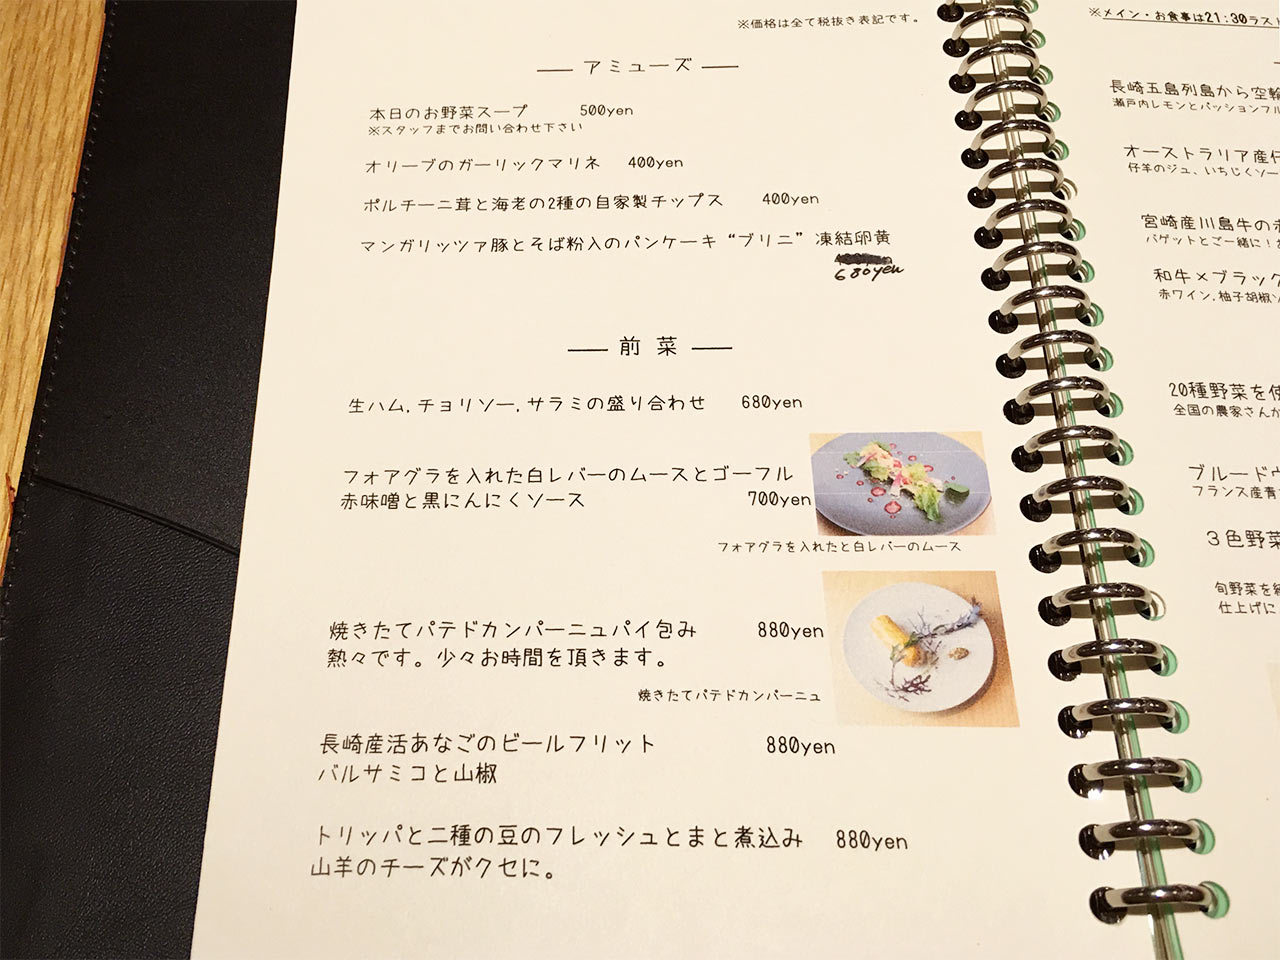 musashikoyama-ferme-201607-menu01